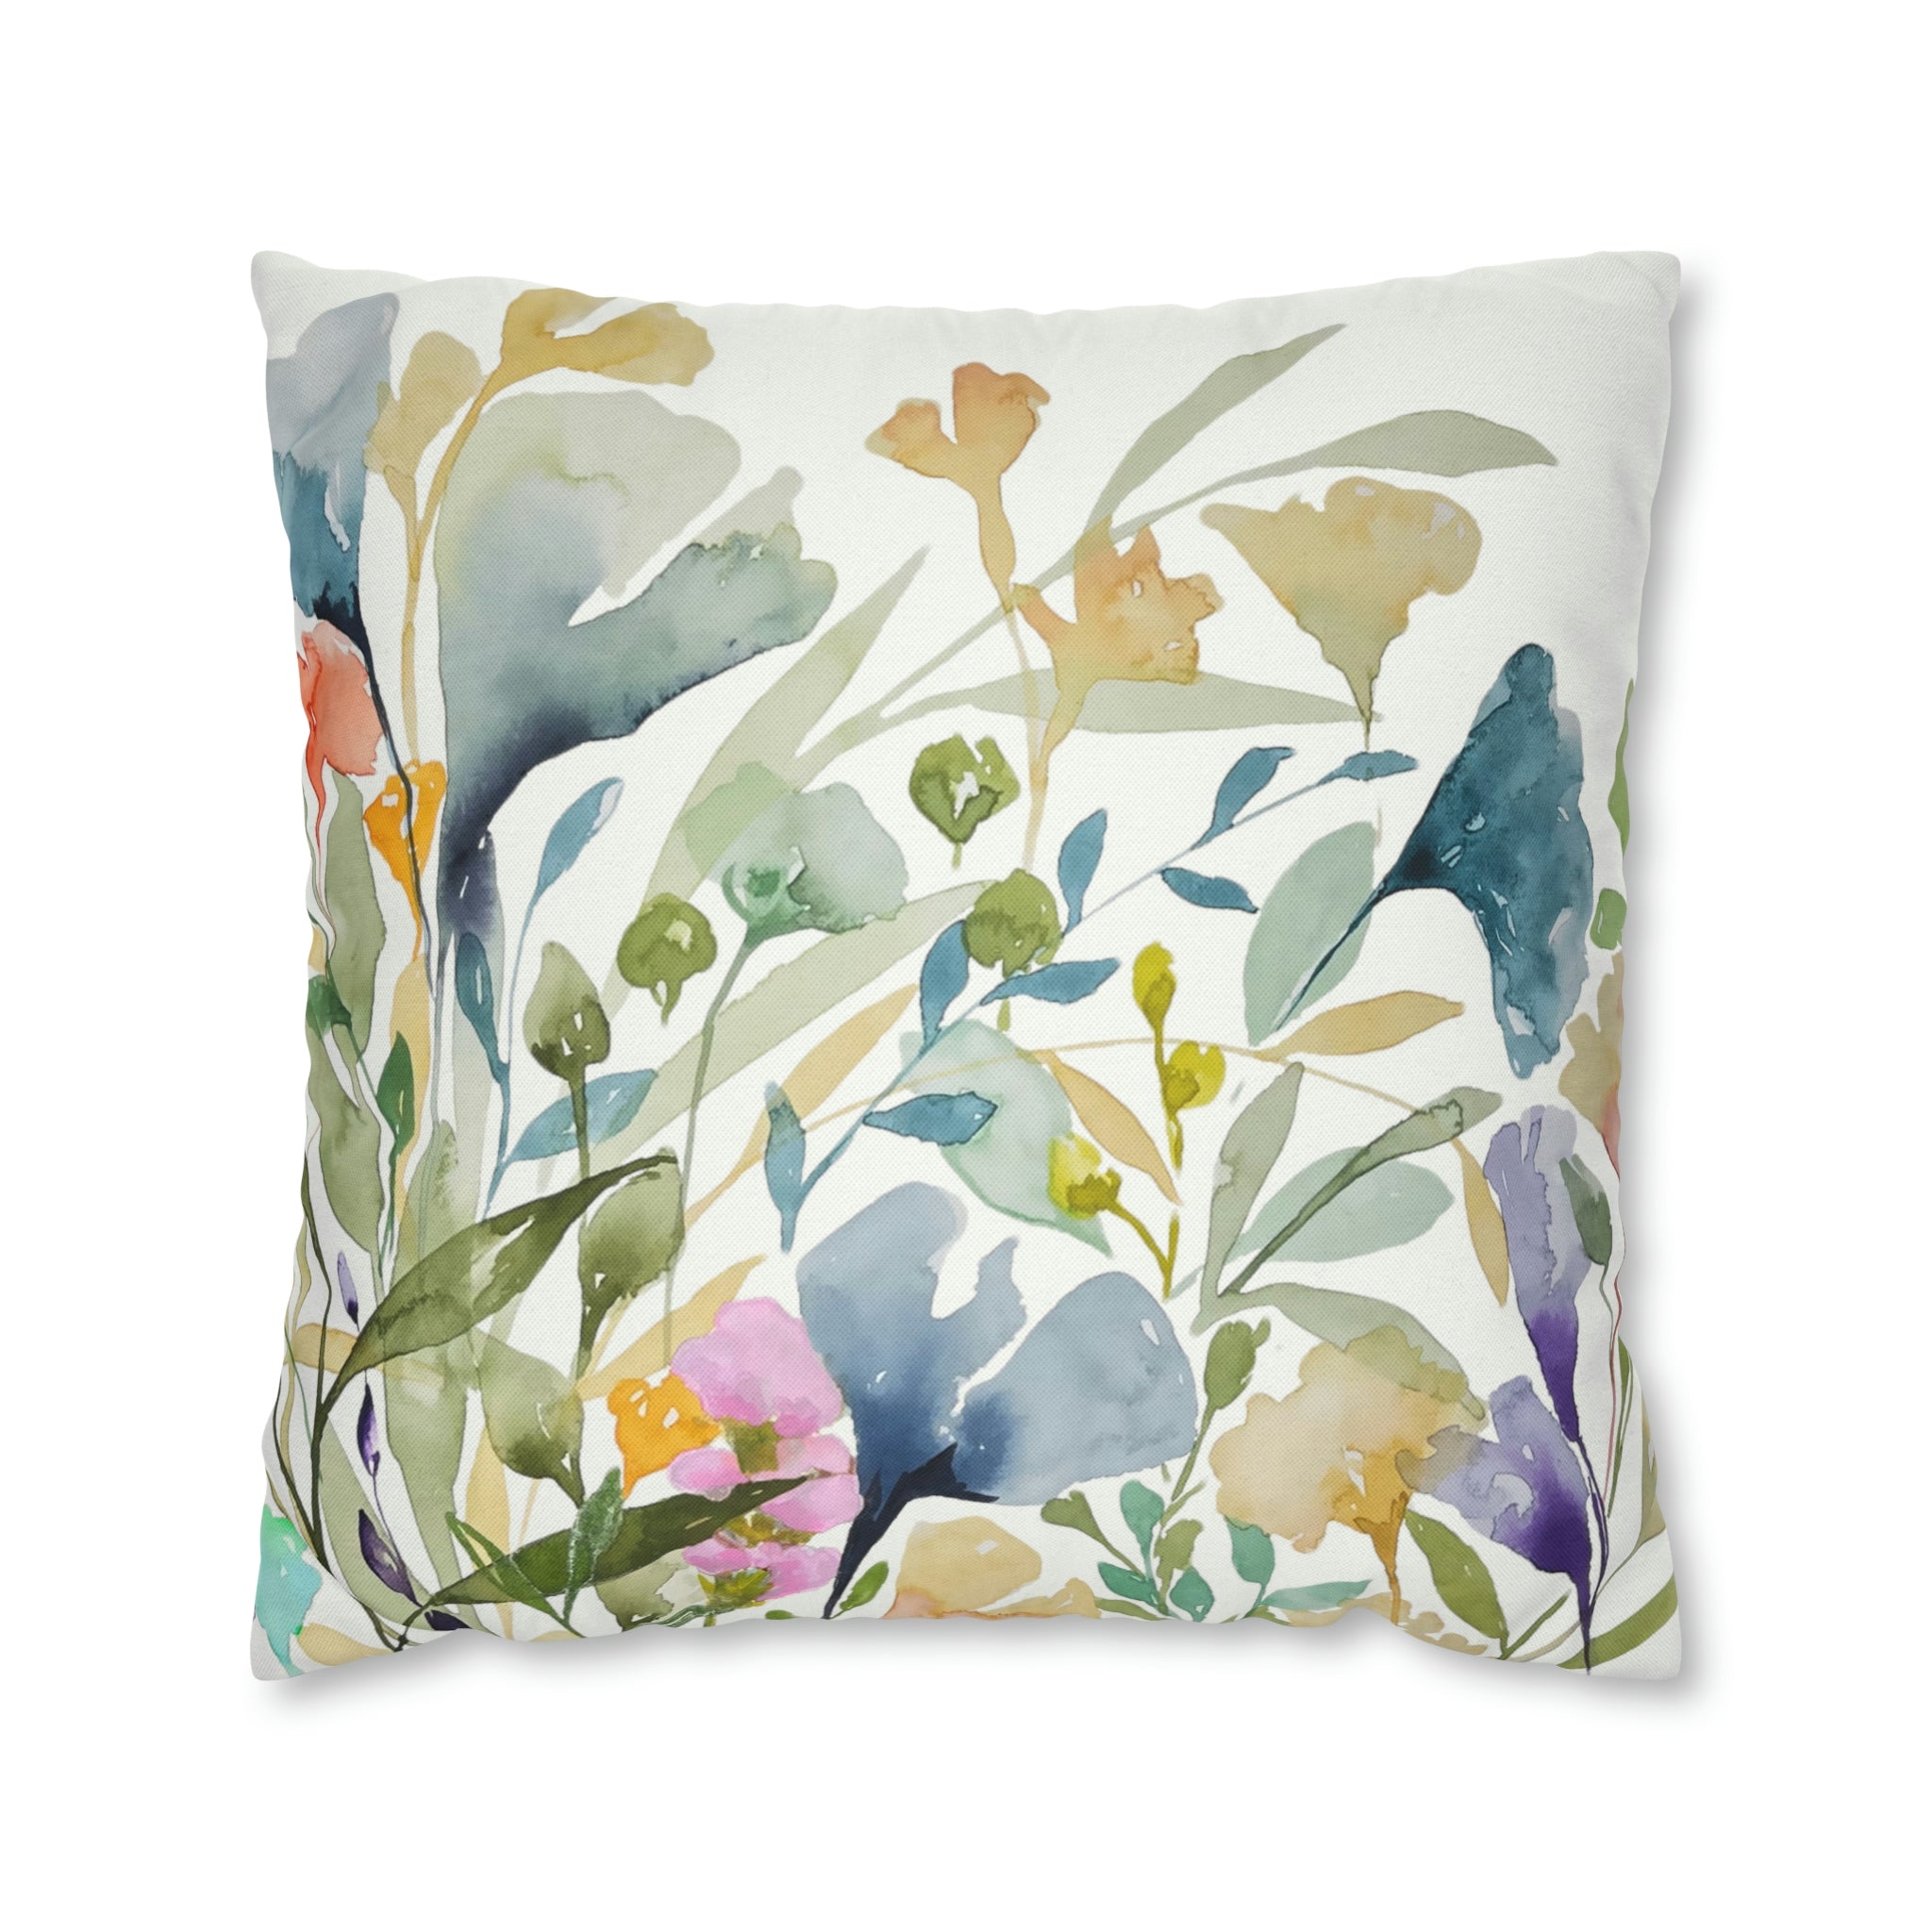 Springles #2 Botanical Garden Print on Throw Pillow Cover